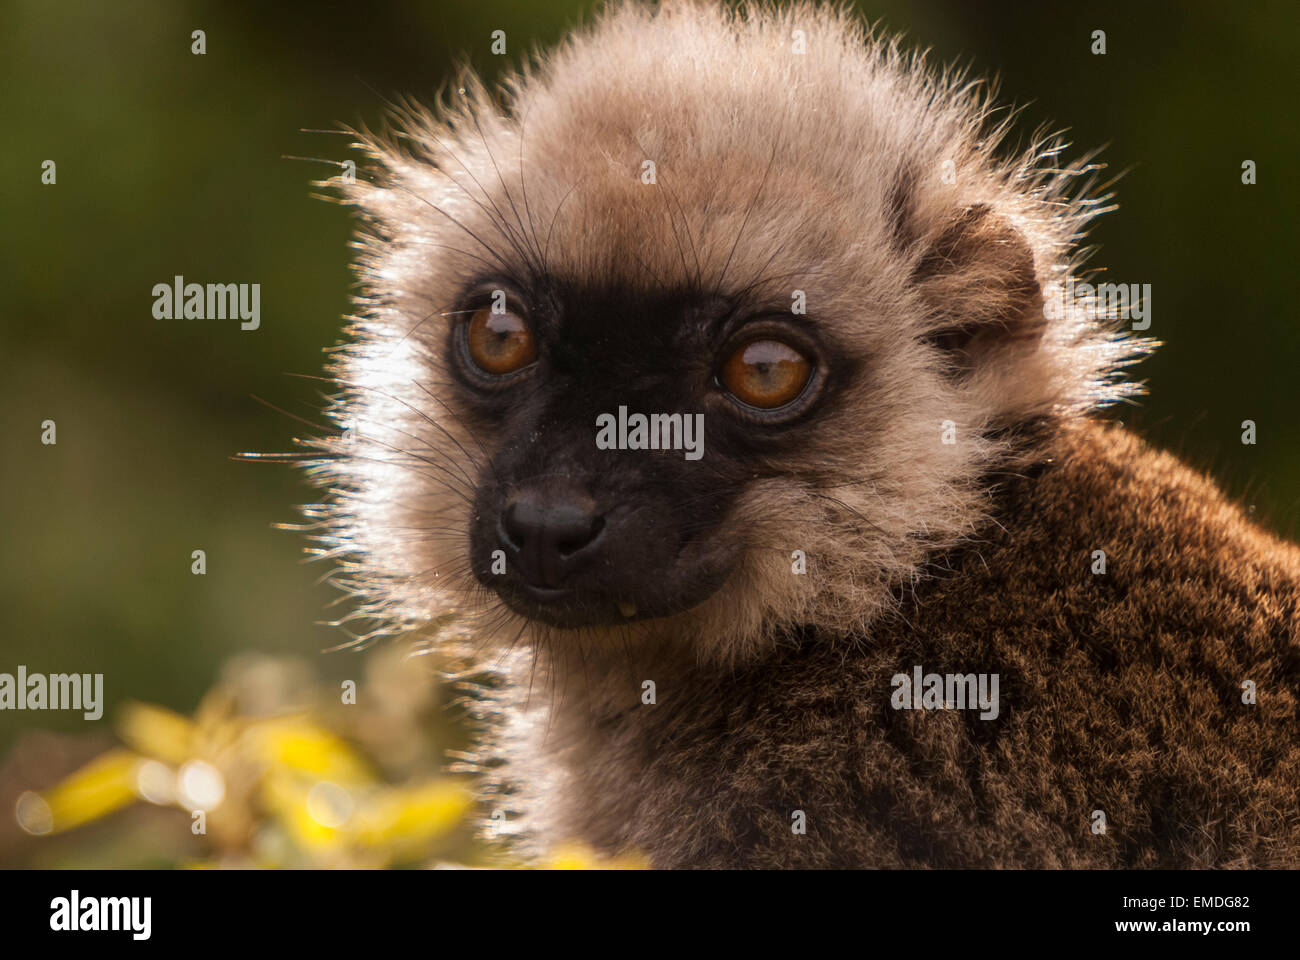 A close up portrait of a captive young Diademed Sifaka, Propithecus diadema, lemur. Stock Photo